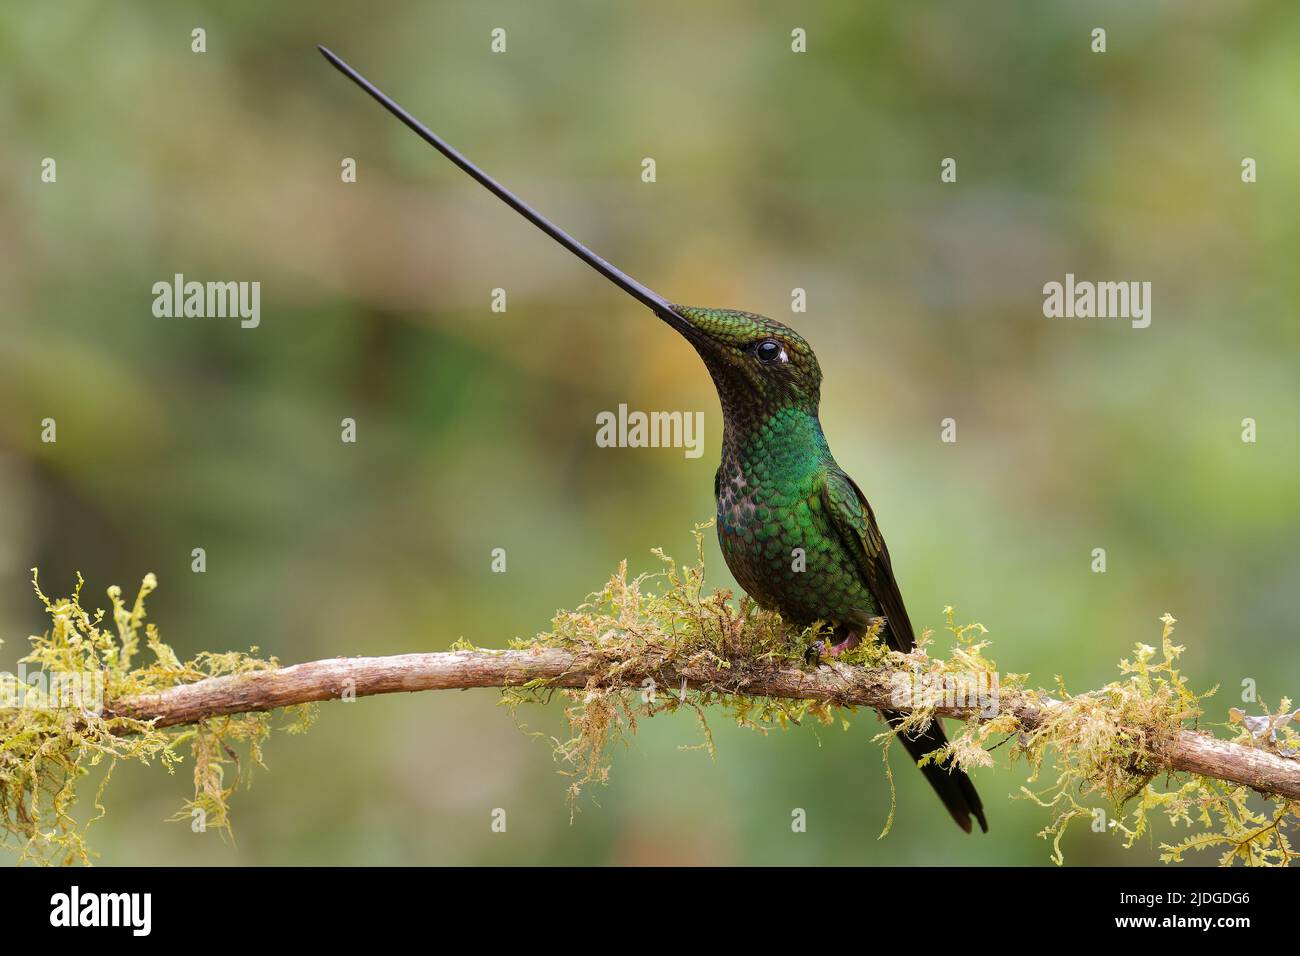 Sword-billed hummingbird - Ensifera ensifera also swordbill, Andean regions of South America, genus Ensifera, unusually long bill to drink nectar from Stock Photo